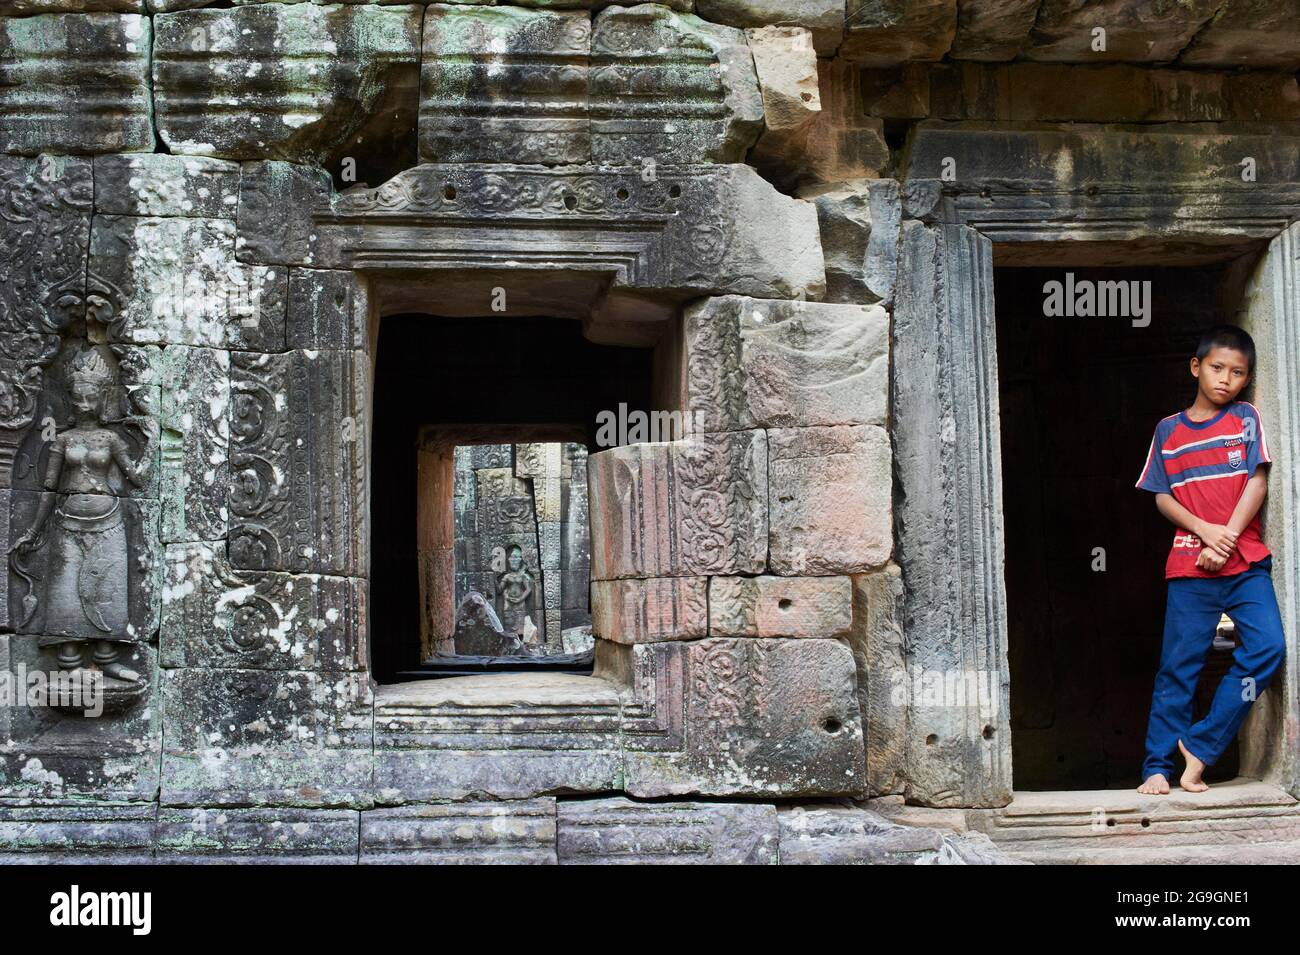 Sudeste de Asia, Camboya, provincia de Siem Reap, sitio de Angkor, patrimonio mundial de la Unesco desde 1992, templo de Banteay Kdei Foto de stock